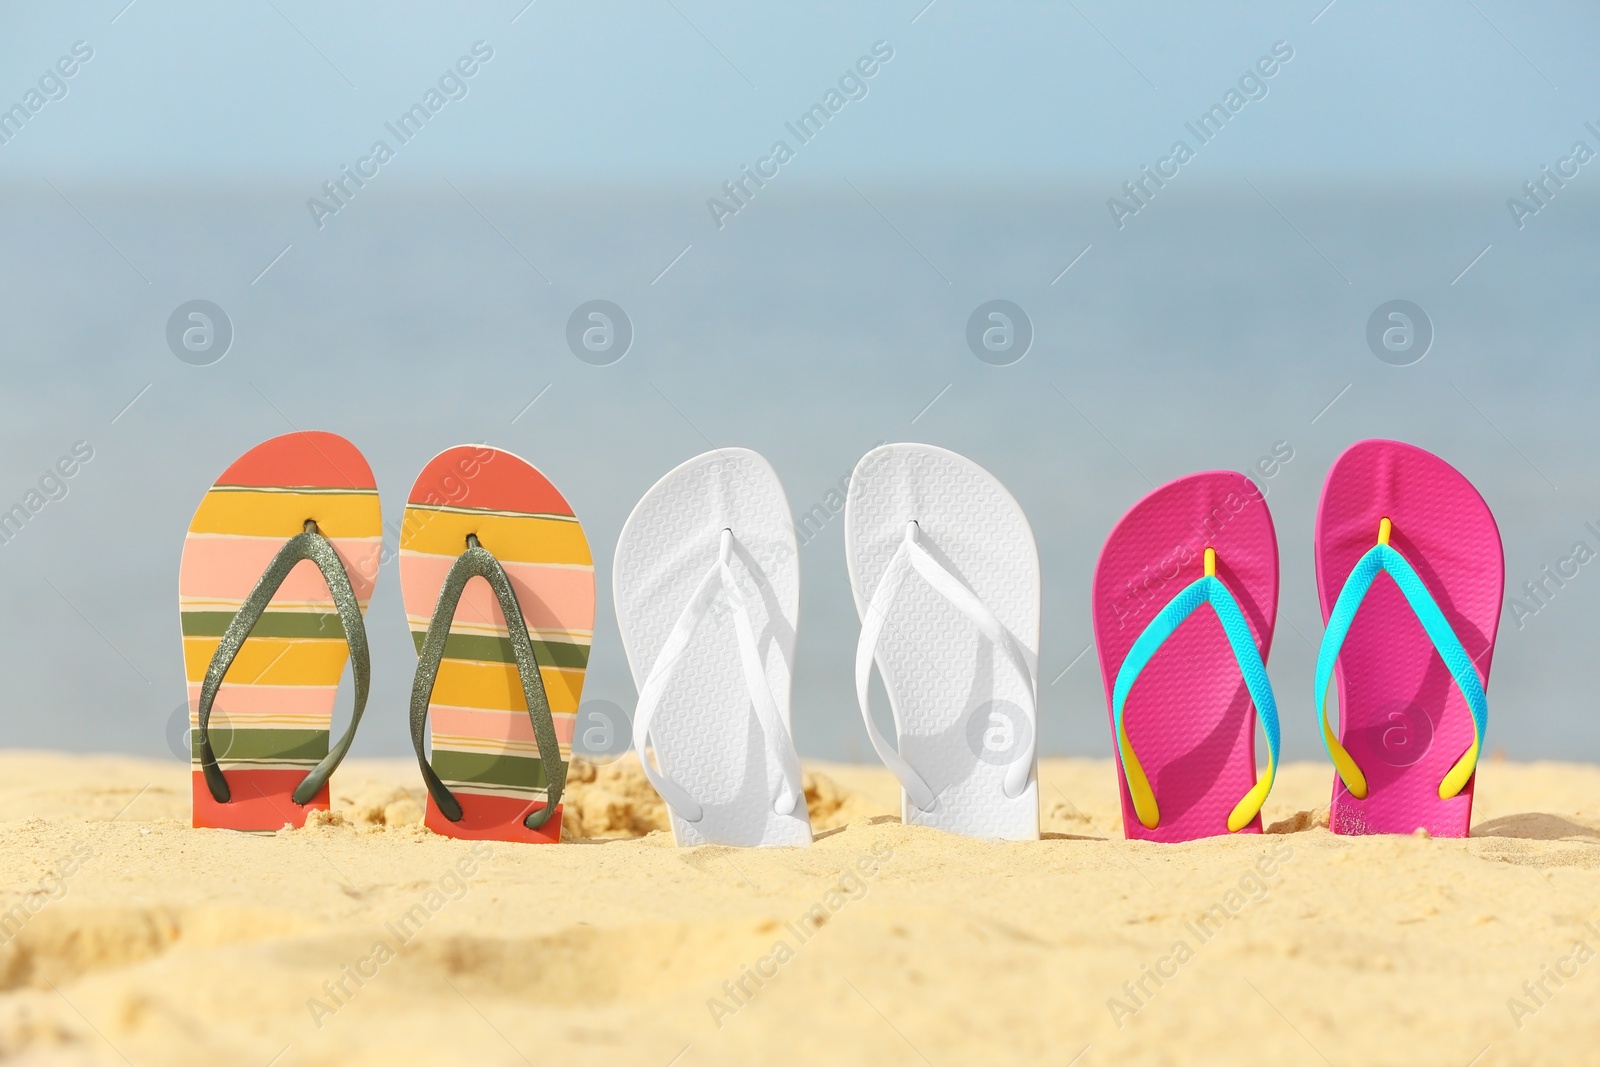 Photo of Different bright flip flops in sand. Beach accessories